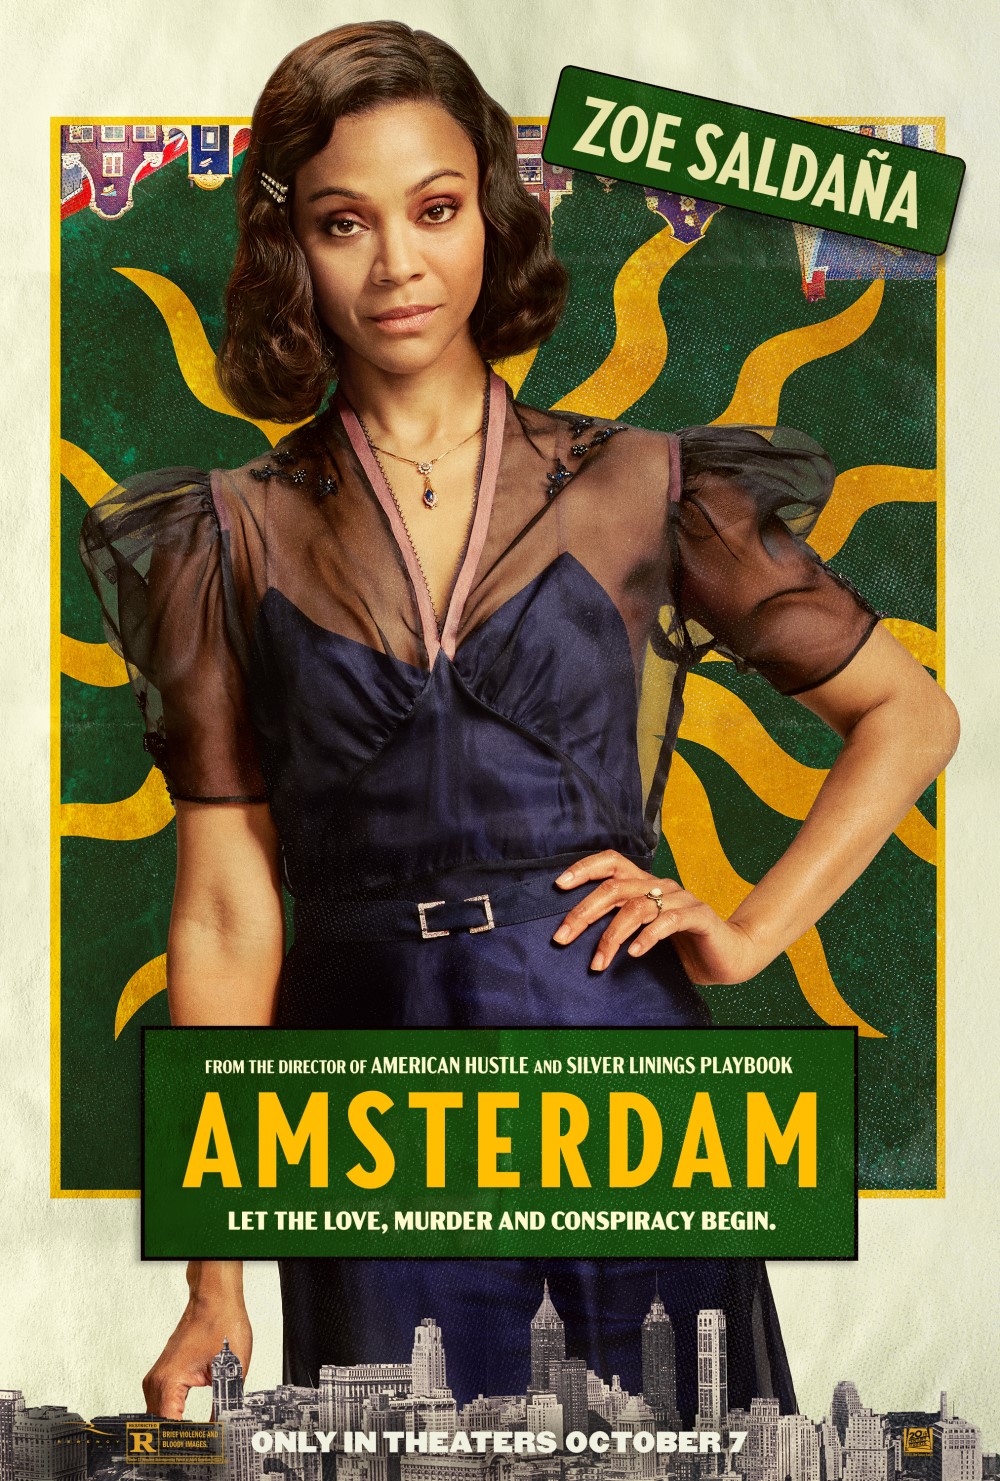 Amsterdam - Zoe Saldana